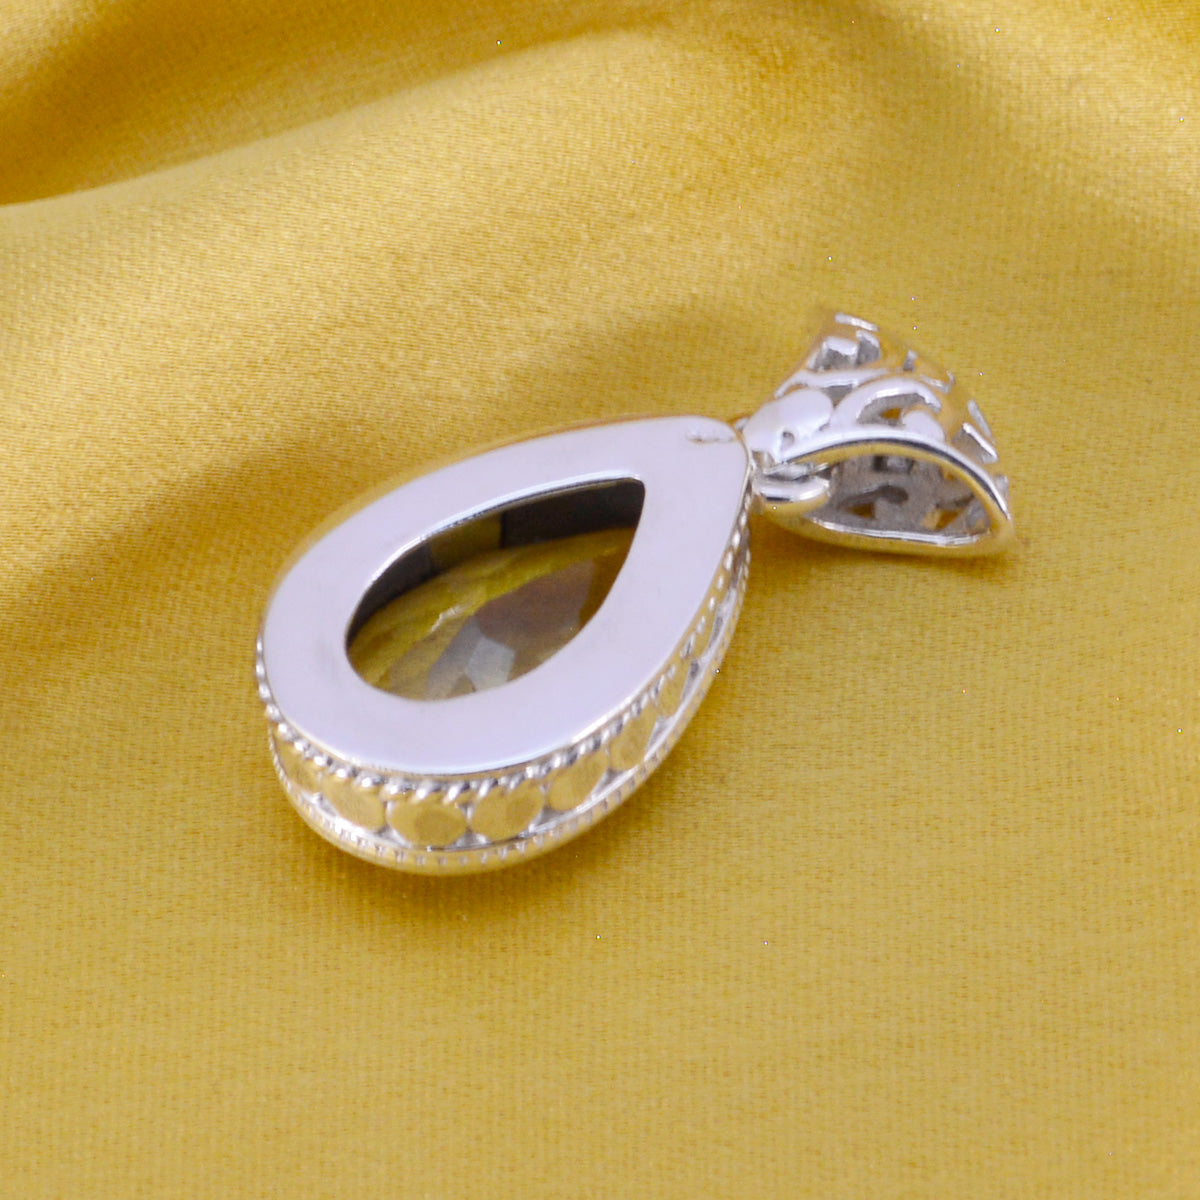 Riyo Real Gemstones Pear checker Yellow Lemon Quartz 925 Silver Pendant engagement gift